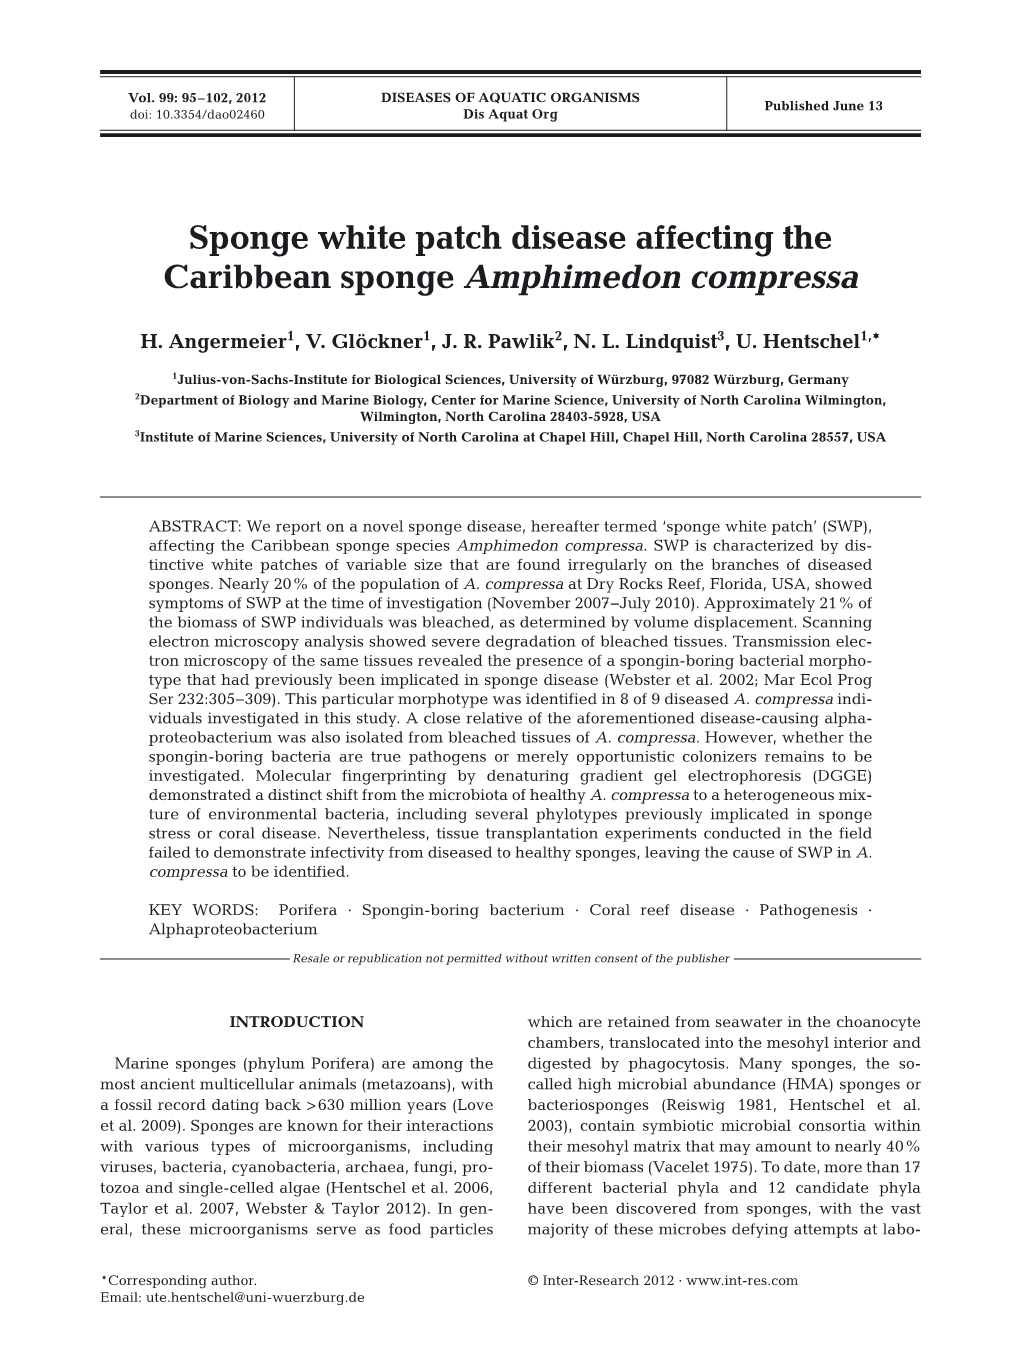 Sponge White Patch Disease Affecting the Caribbean Sponge Amphimedon Compressa